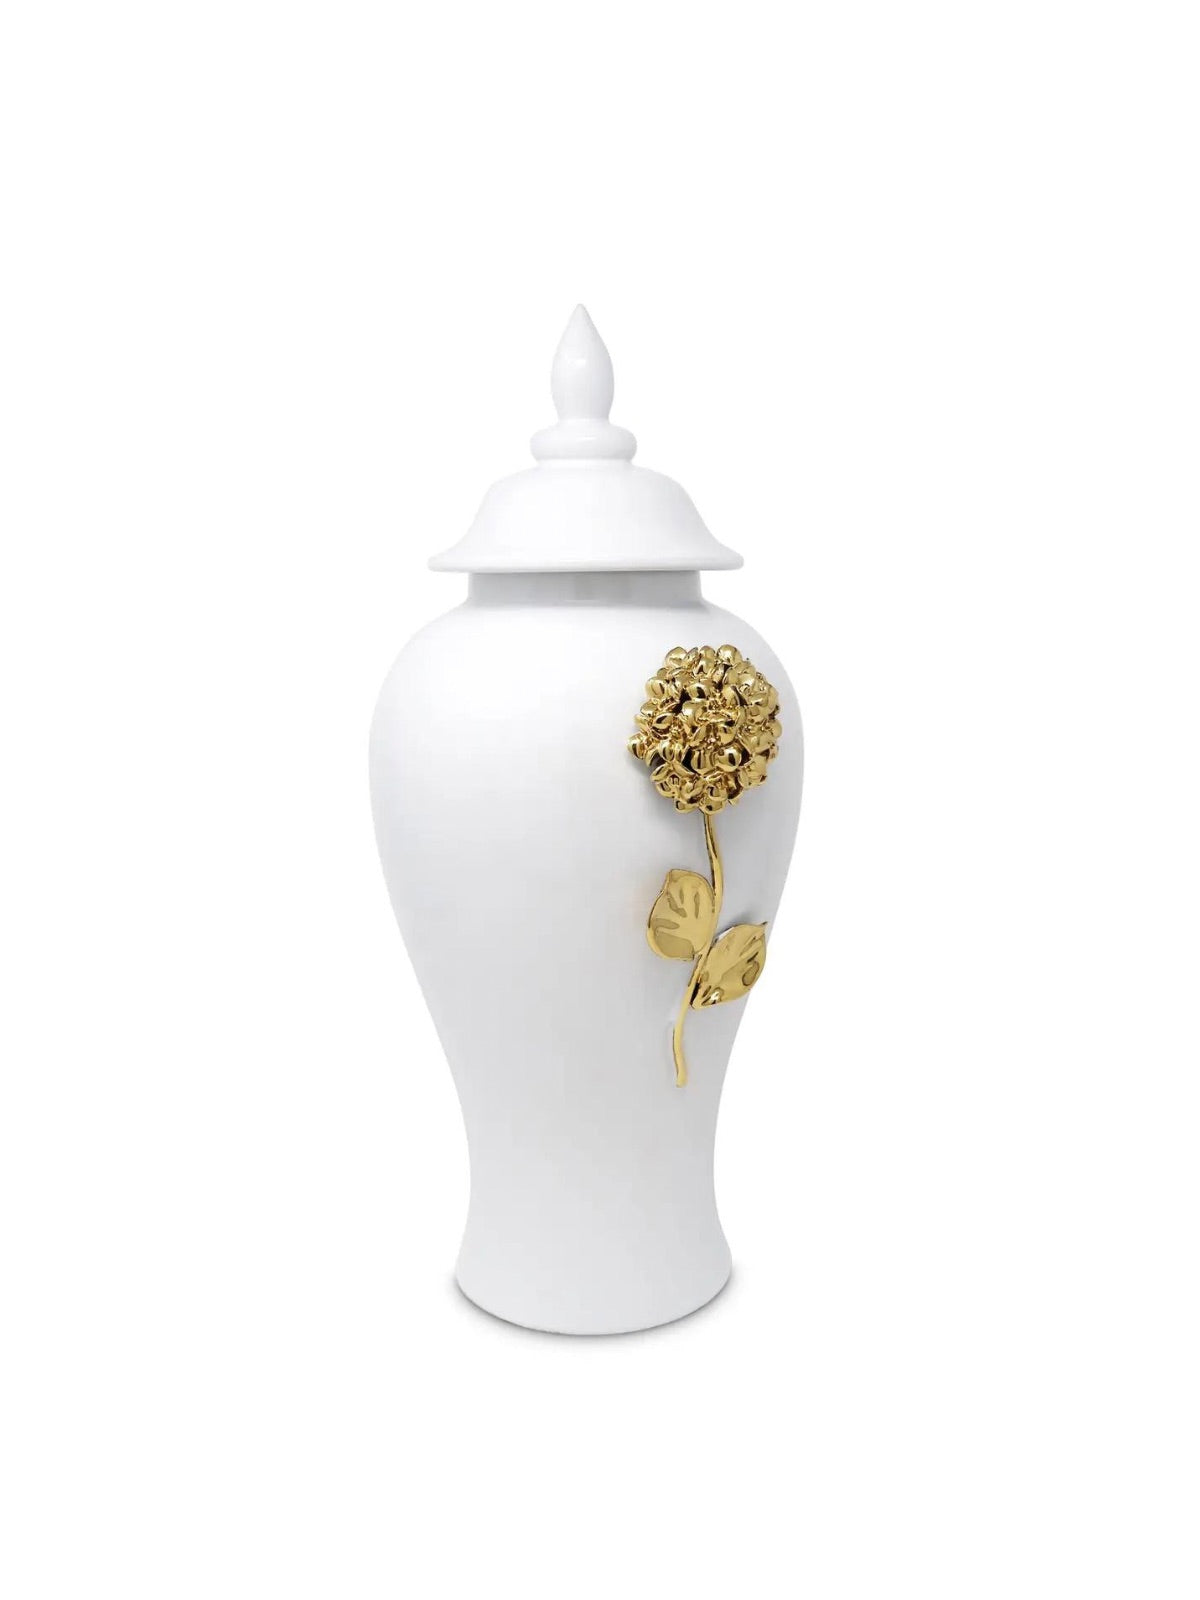 White Ceramic Ginger Jar with Sparkling Gold Flower Detail - Available in Medium.